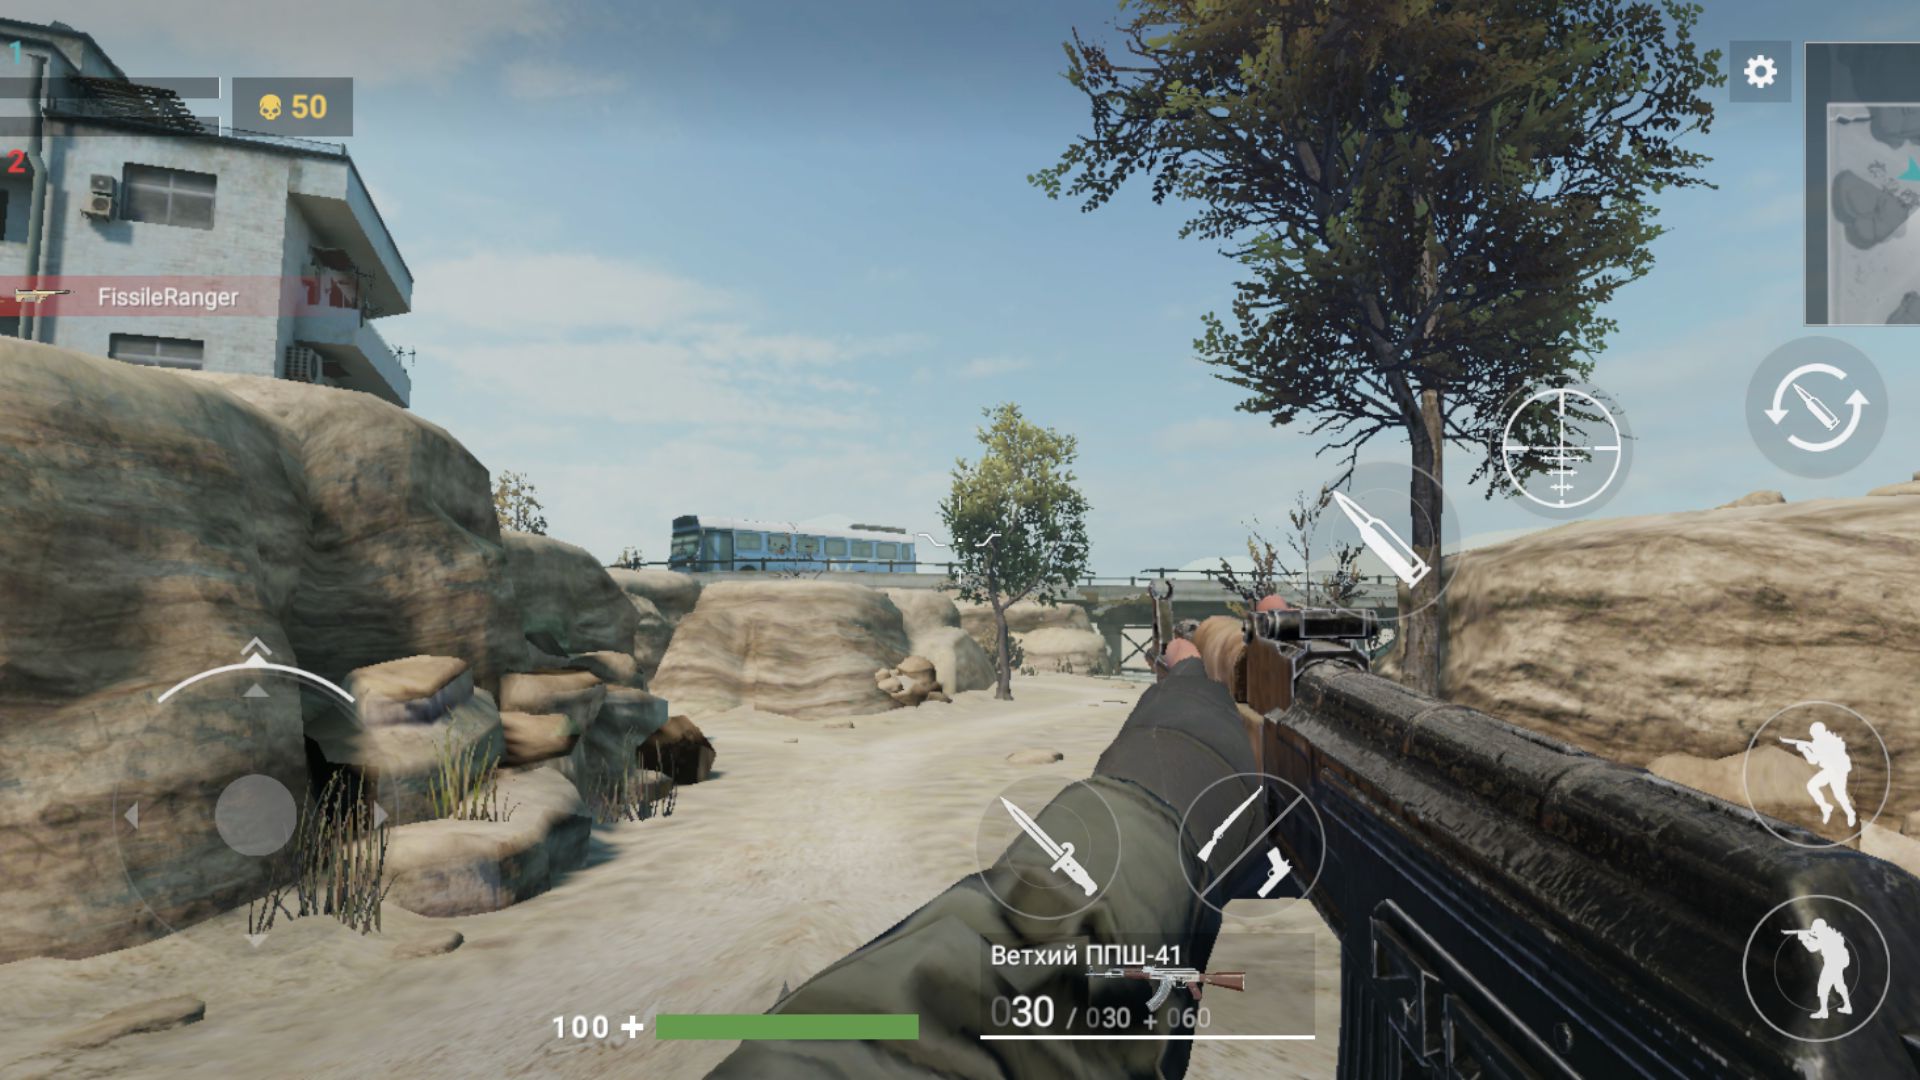 Modern Gun: Shooting War Games - Android game screenshots.